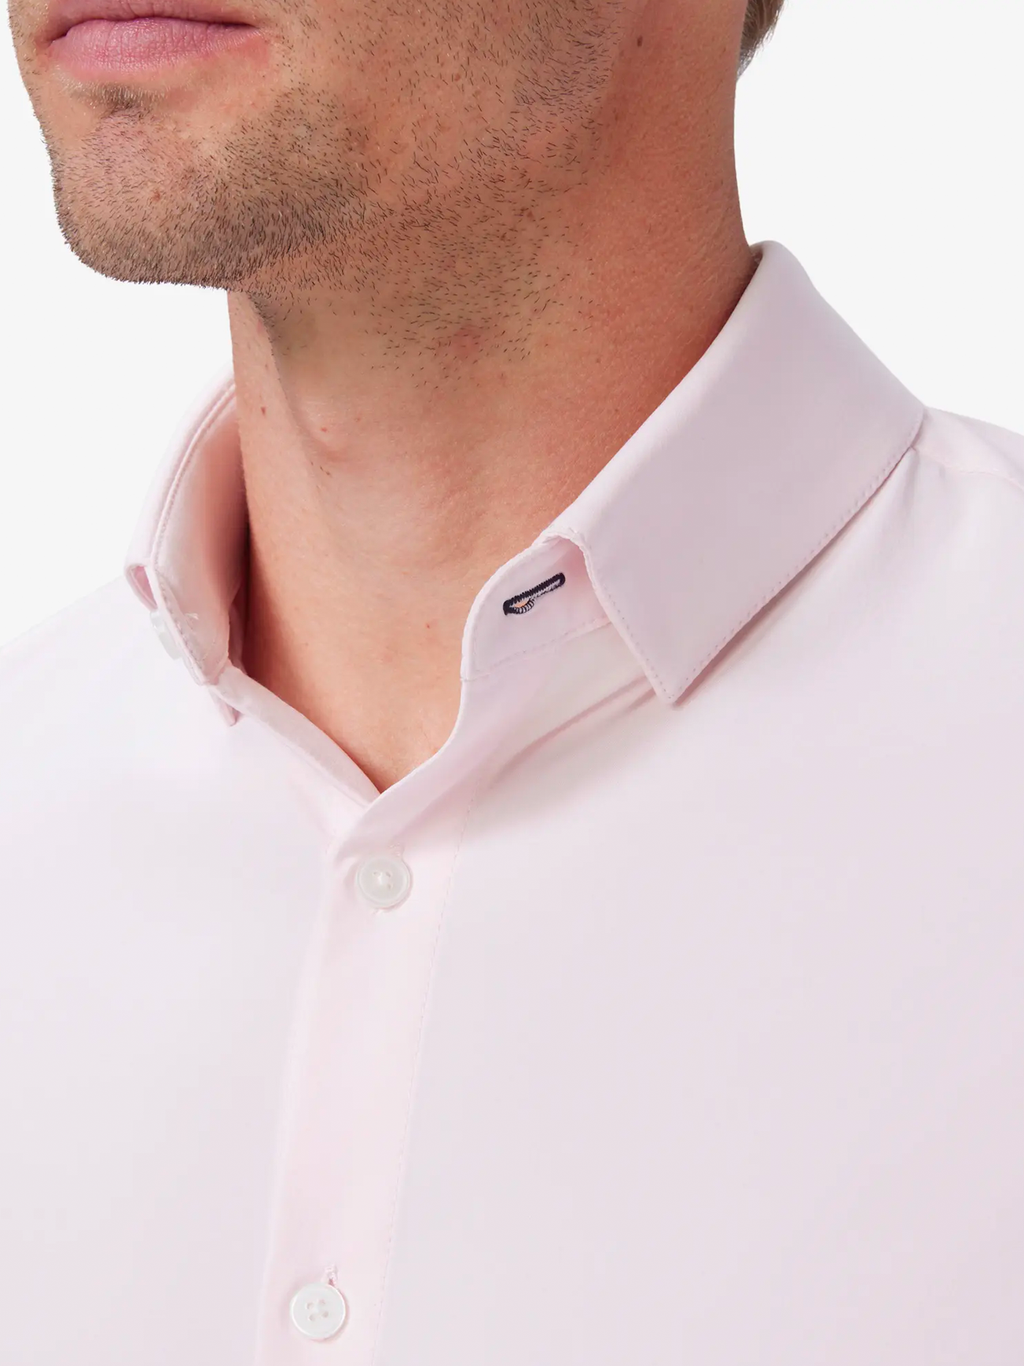 Leeward Long Sleeve Shirt in True Pink